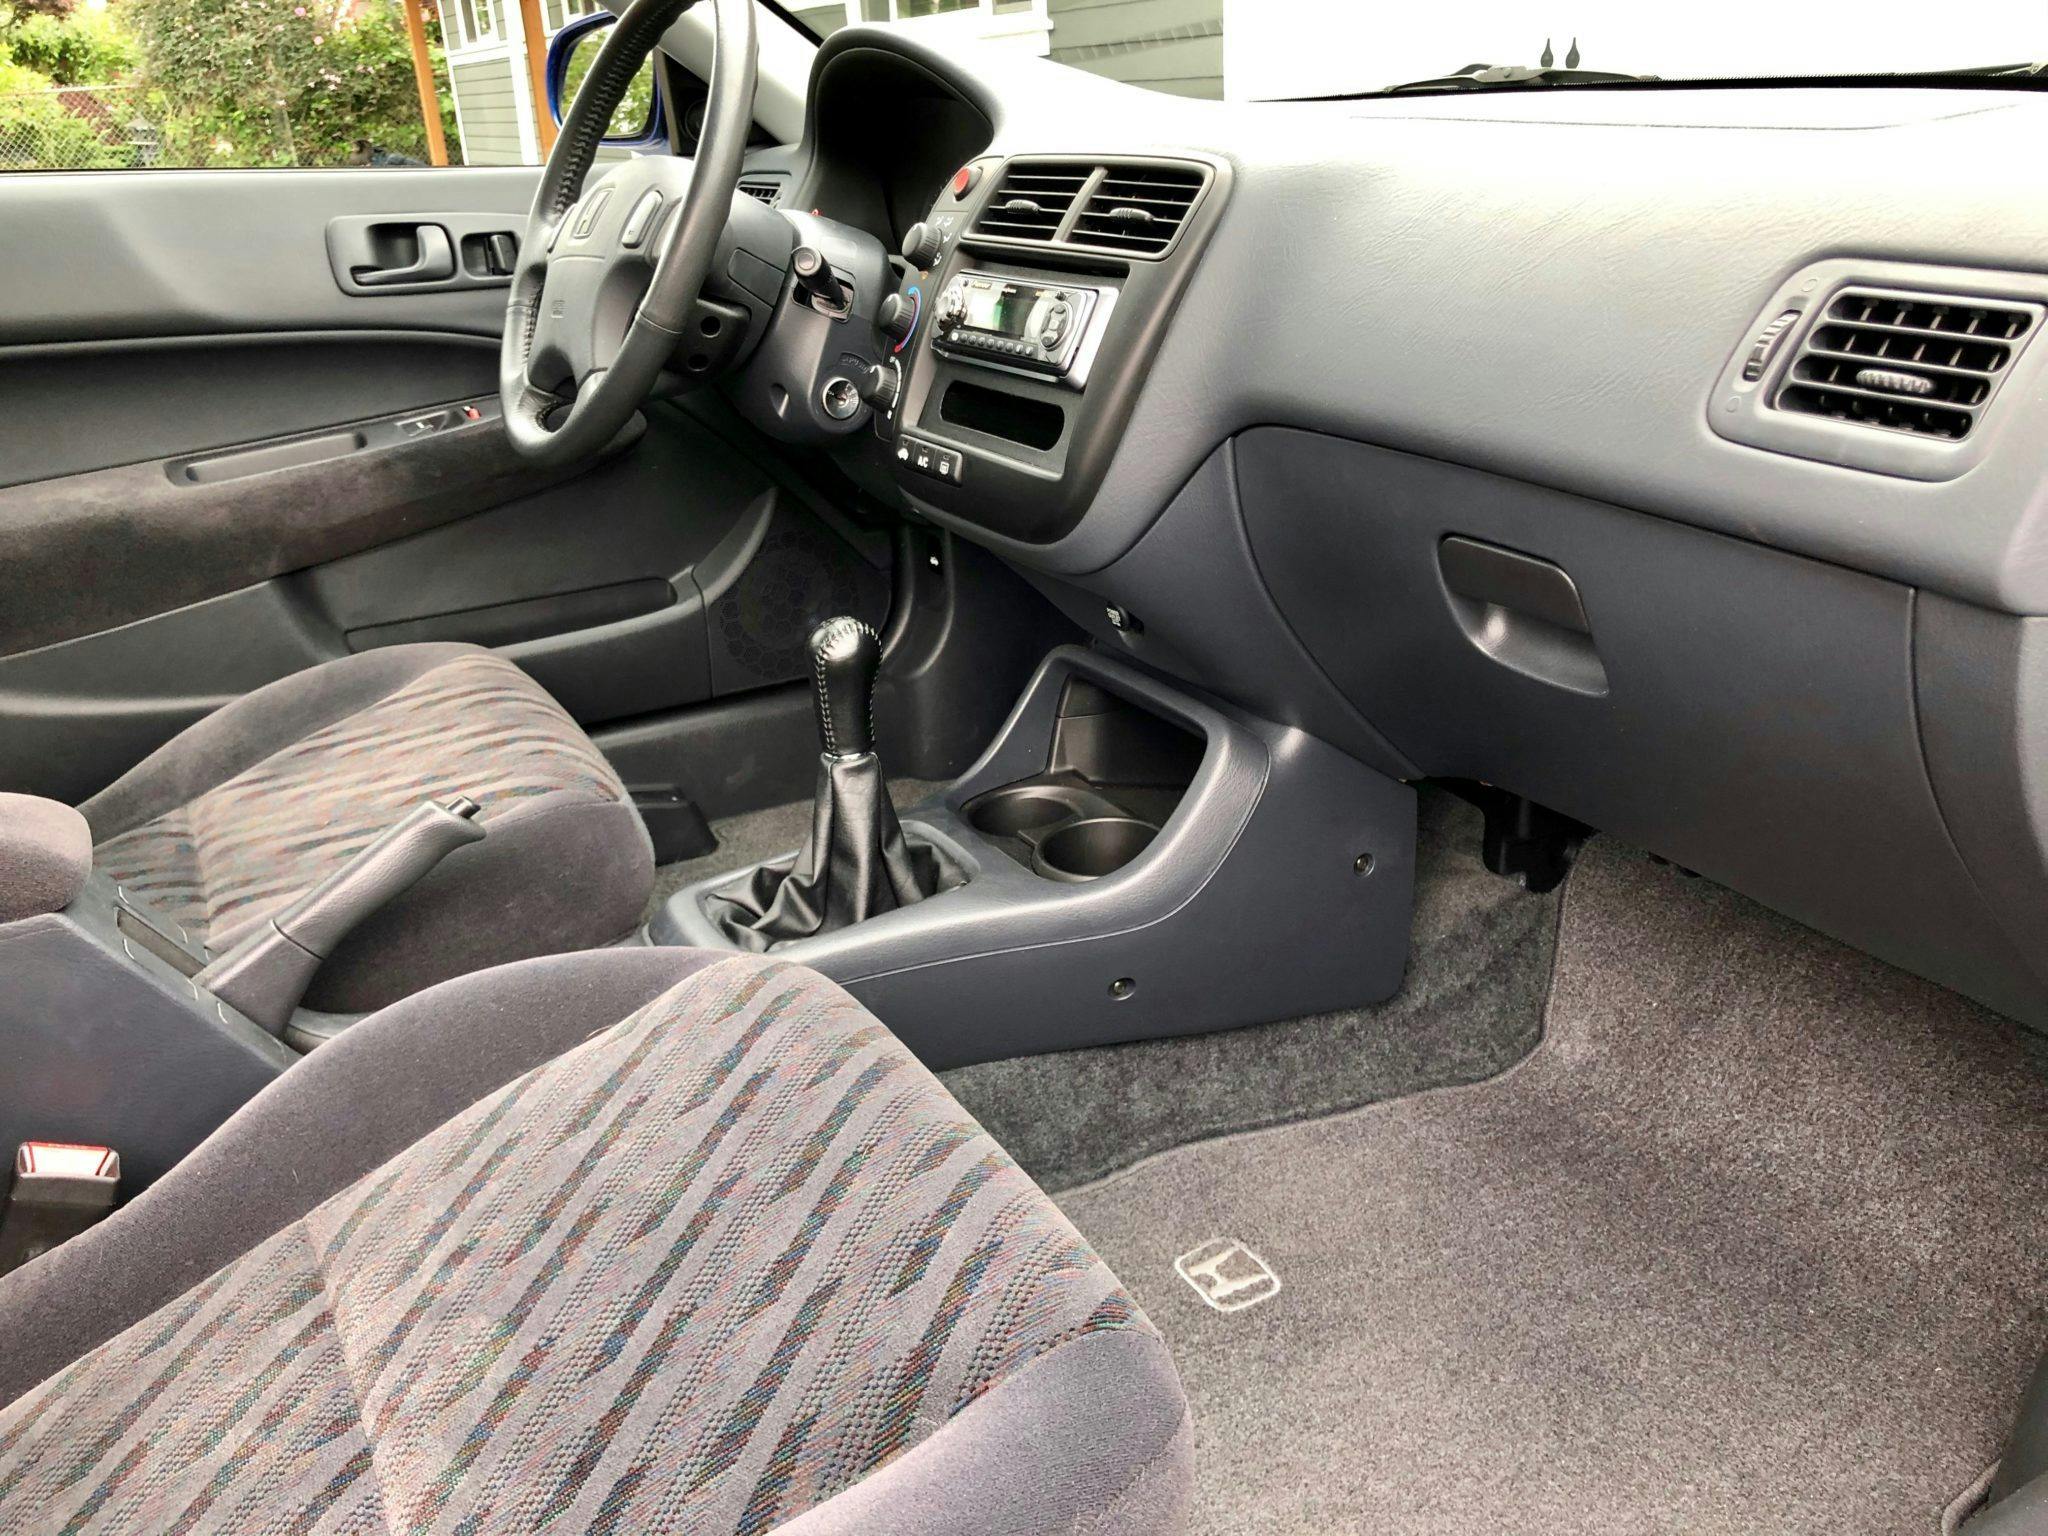 2000 Honda Civic Si Interior